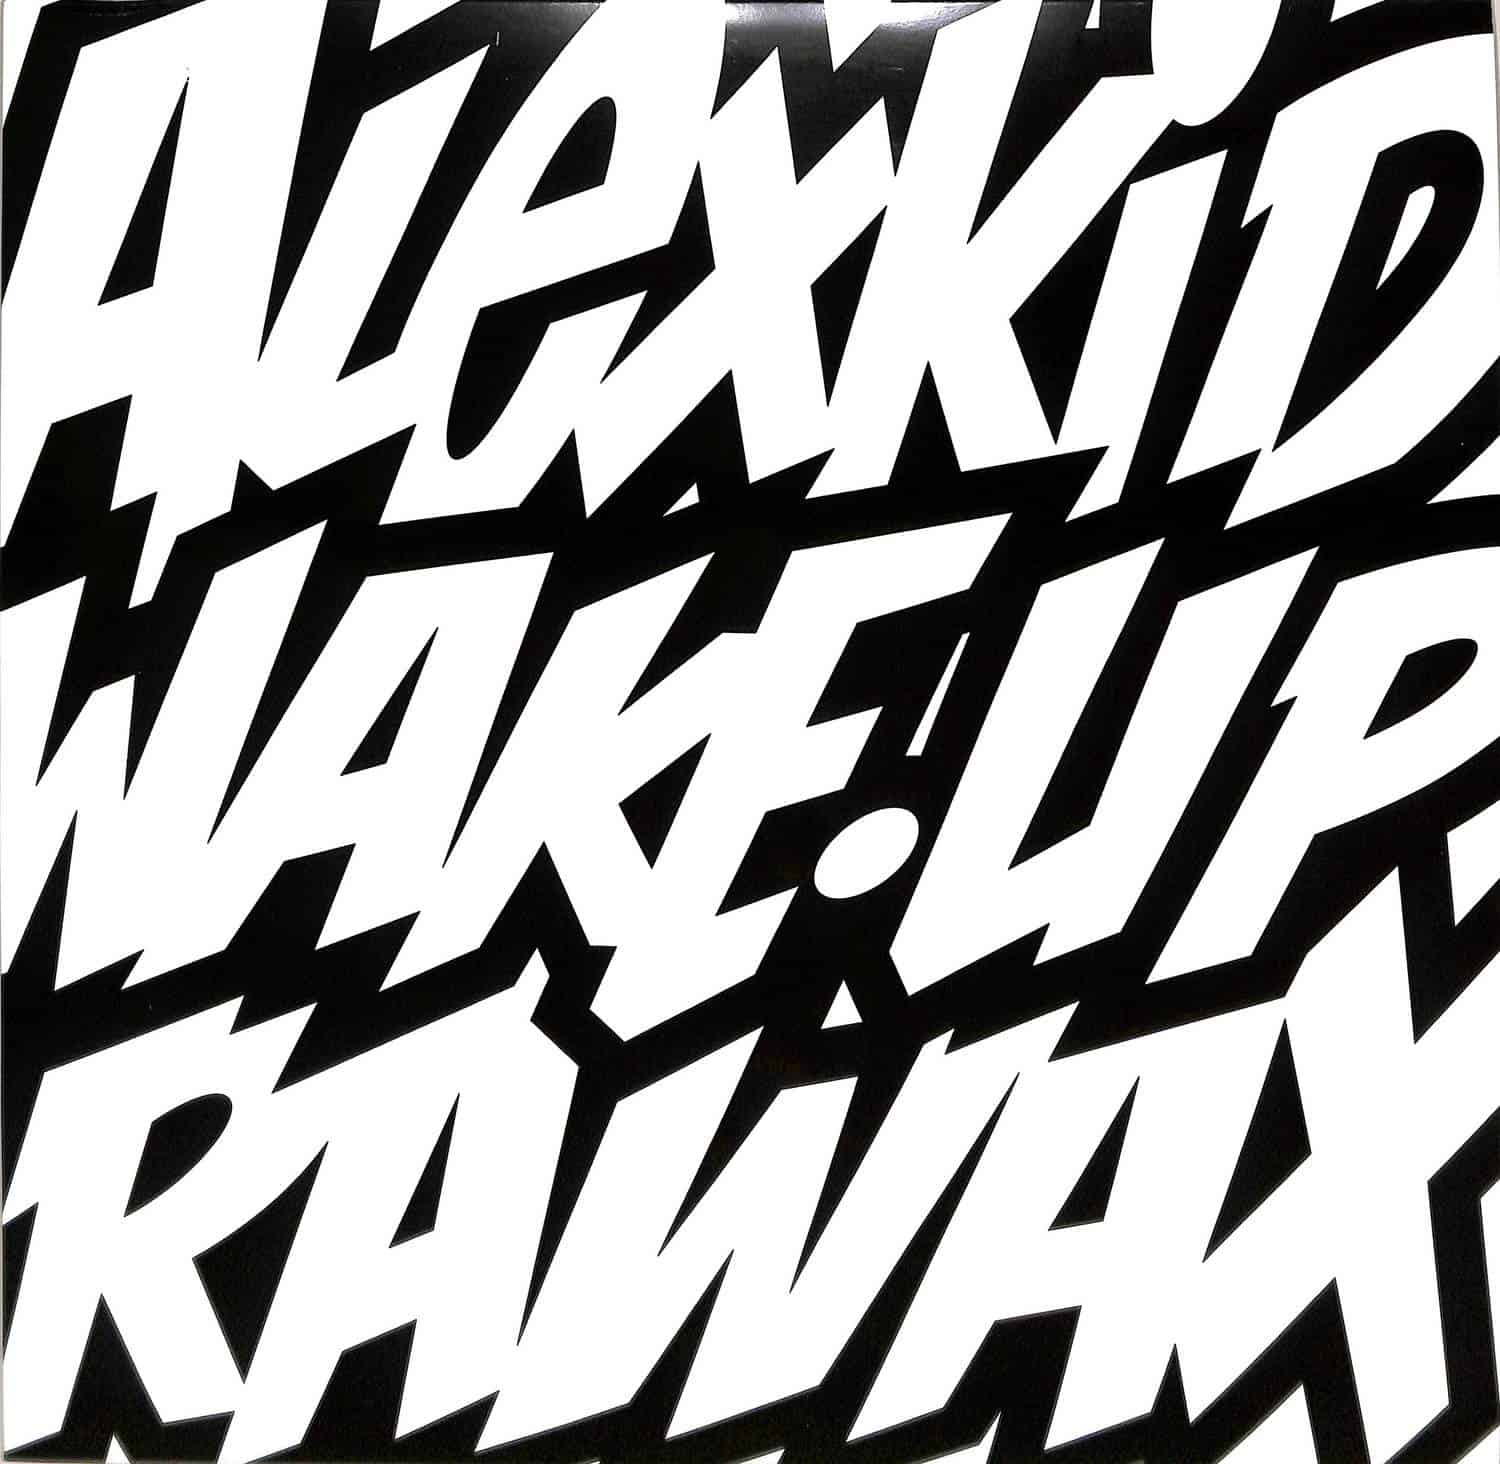 Alexkid - WAKE UP 